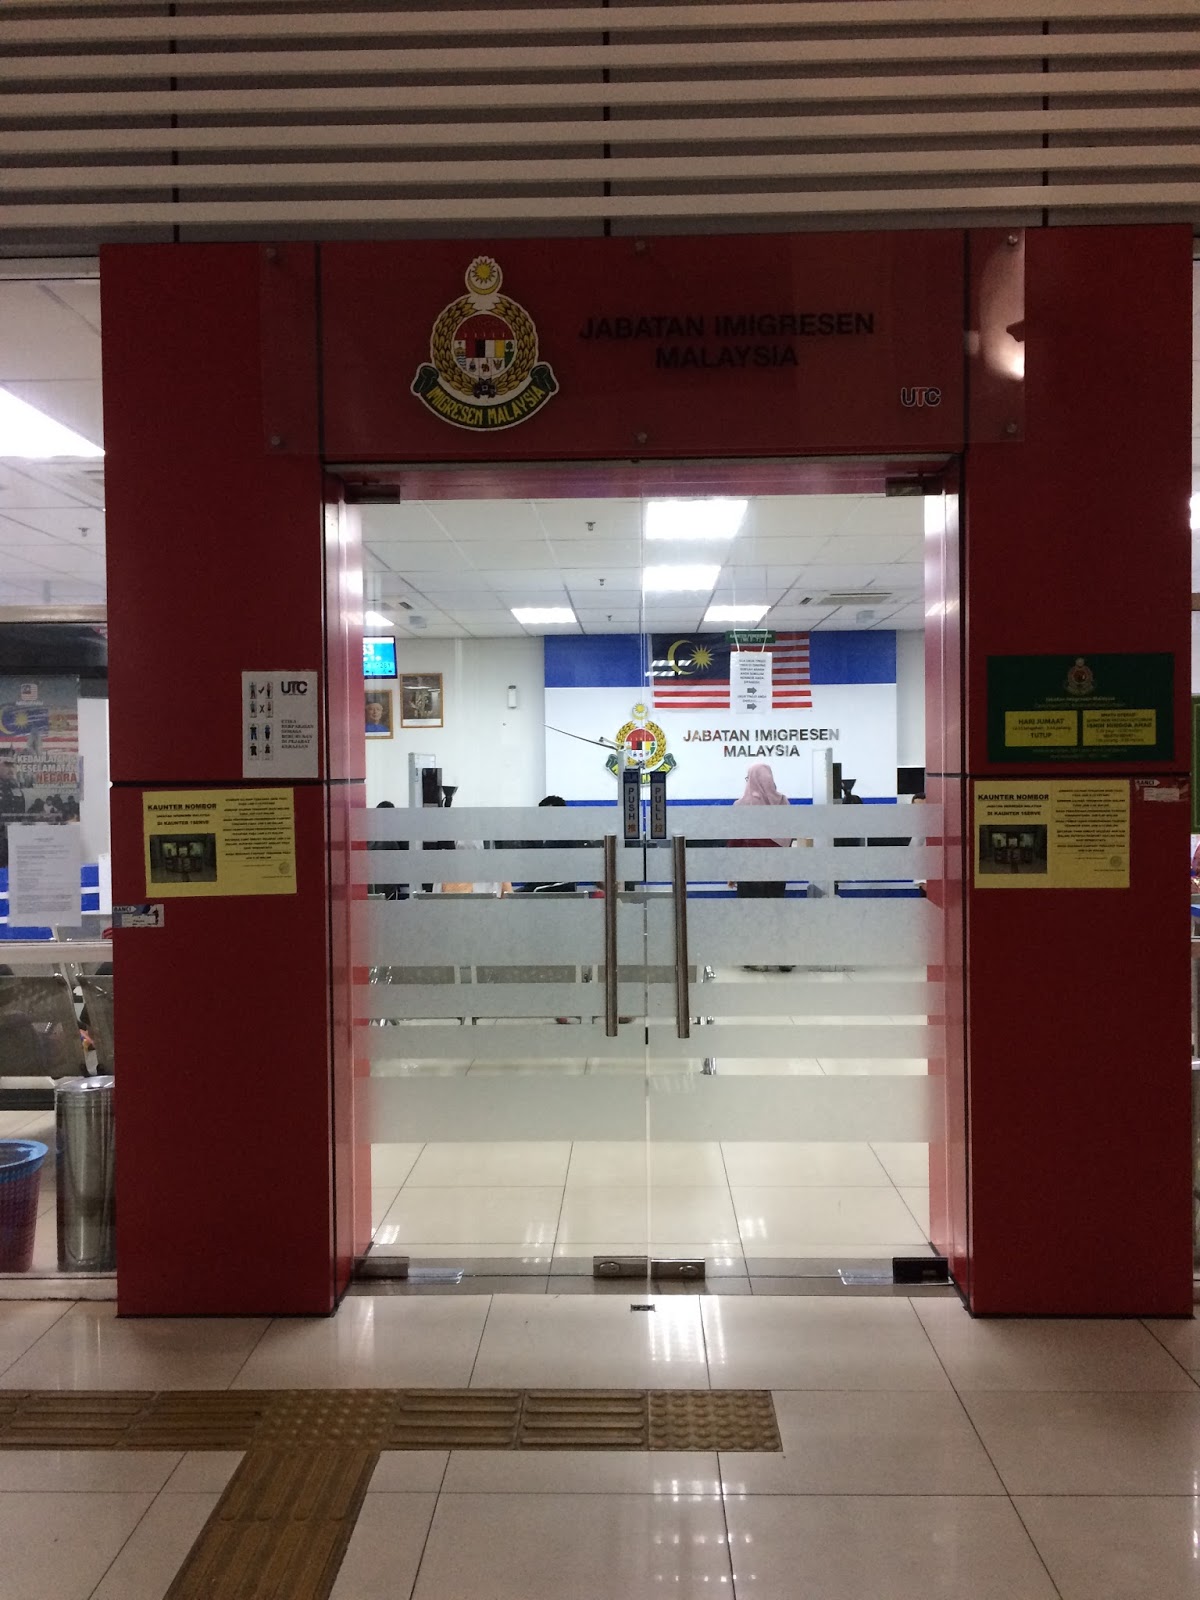 Onattycan Renewing Your Malaysian Passport In Just 30 Minutes 21 April 2018